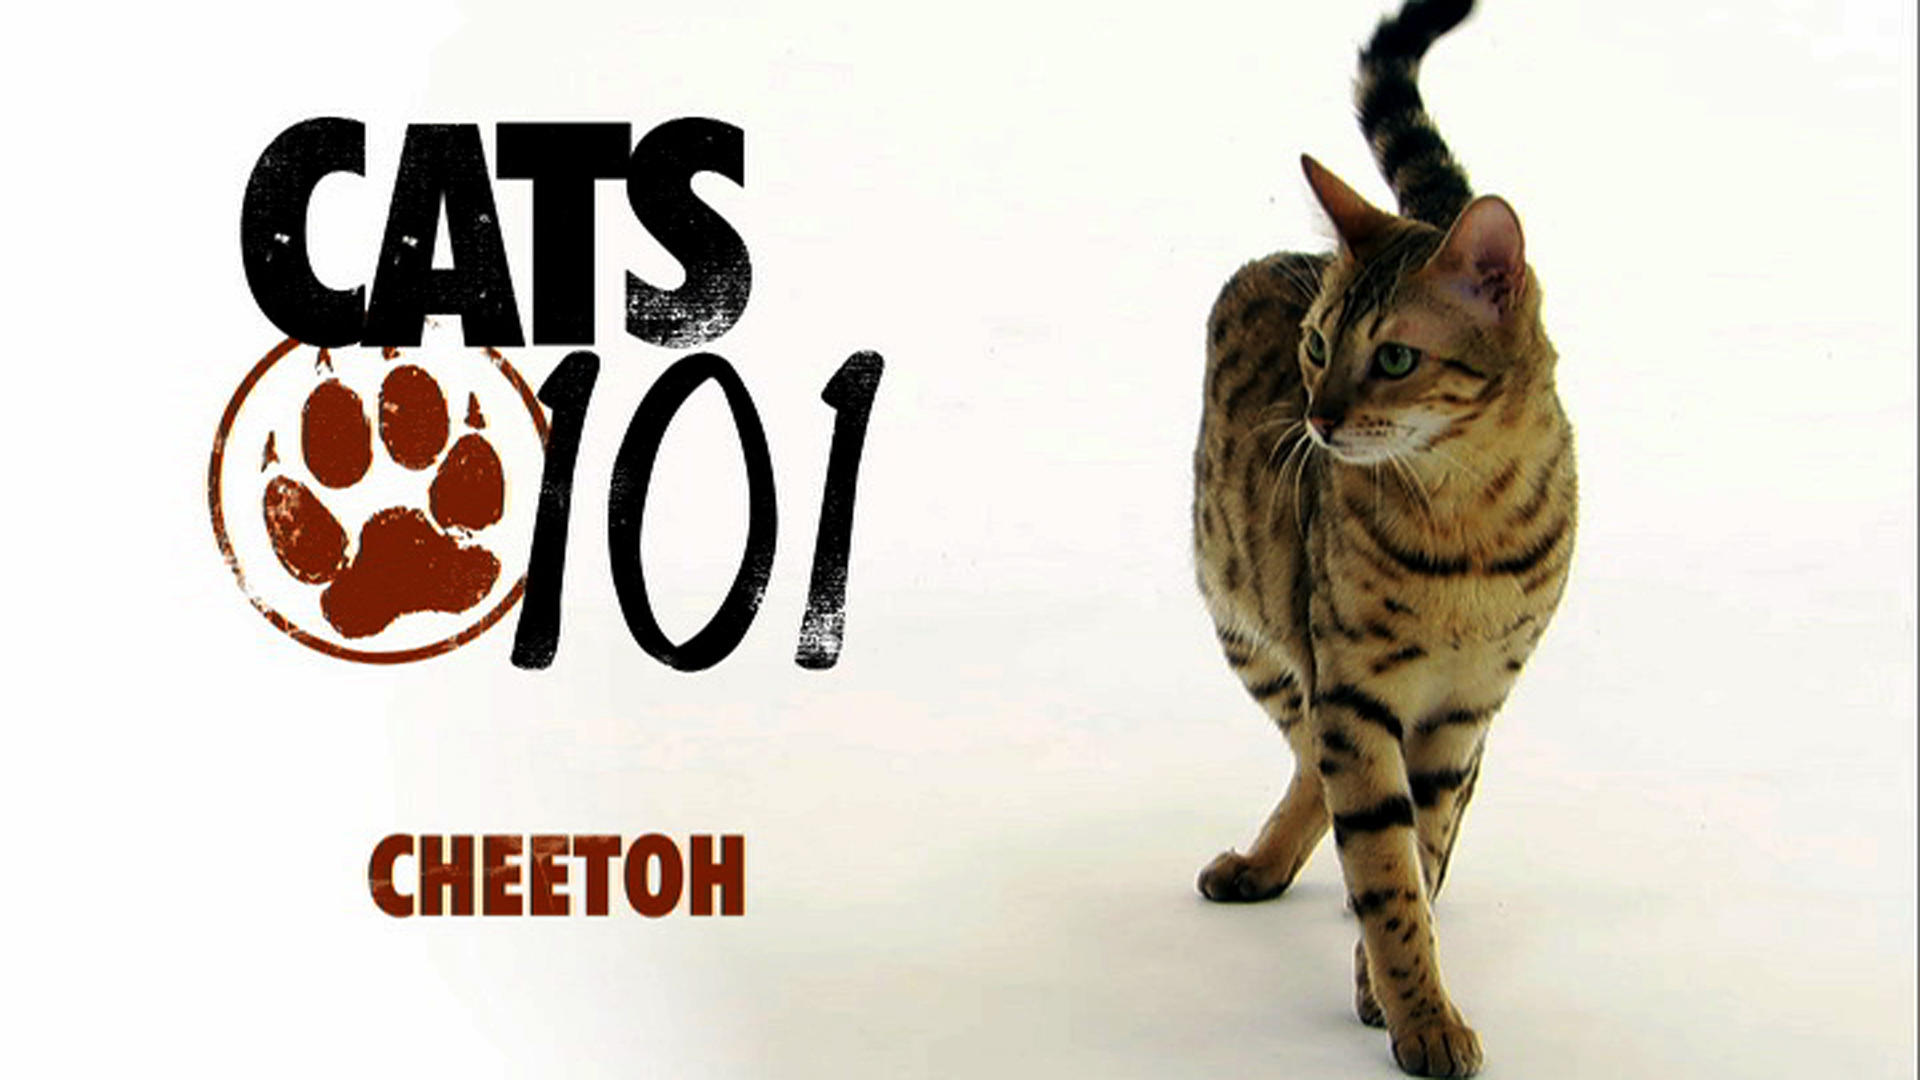 Cheetoh | Cats 101 | Animal Planet1920 x 1080